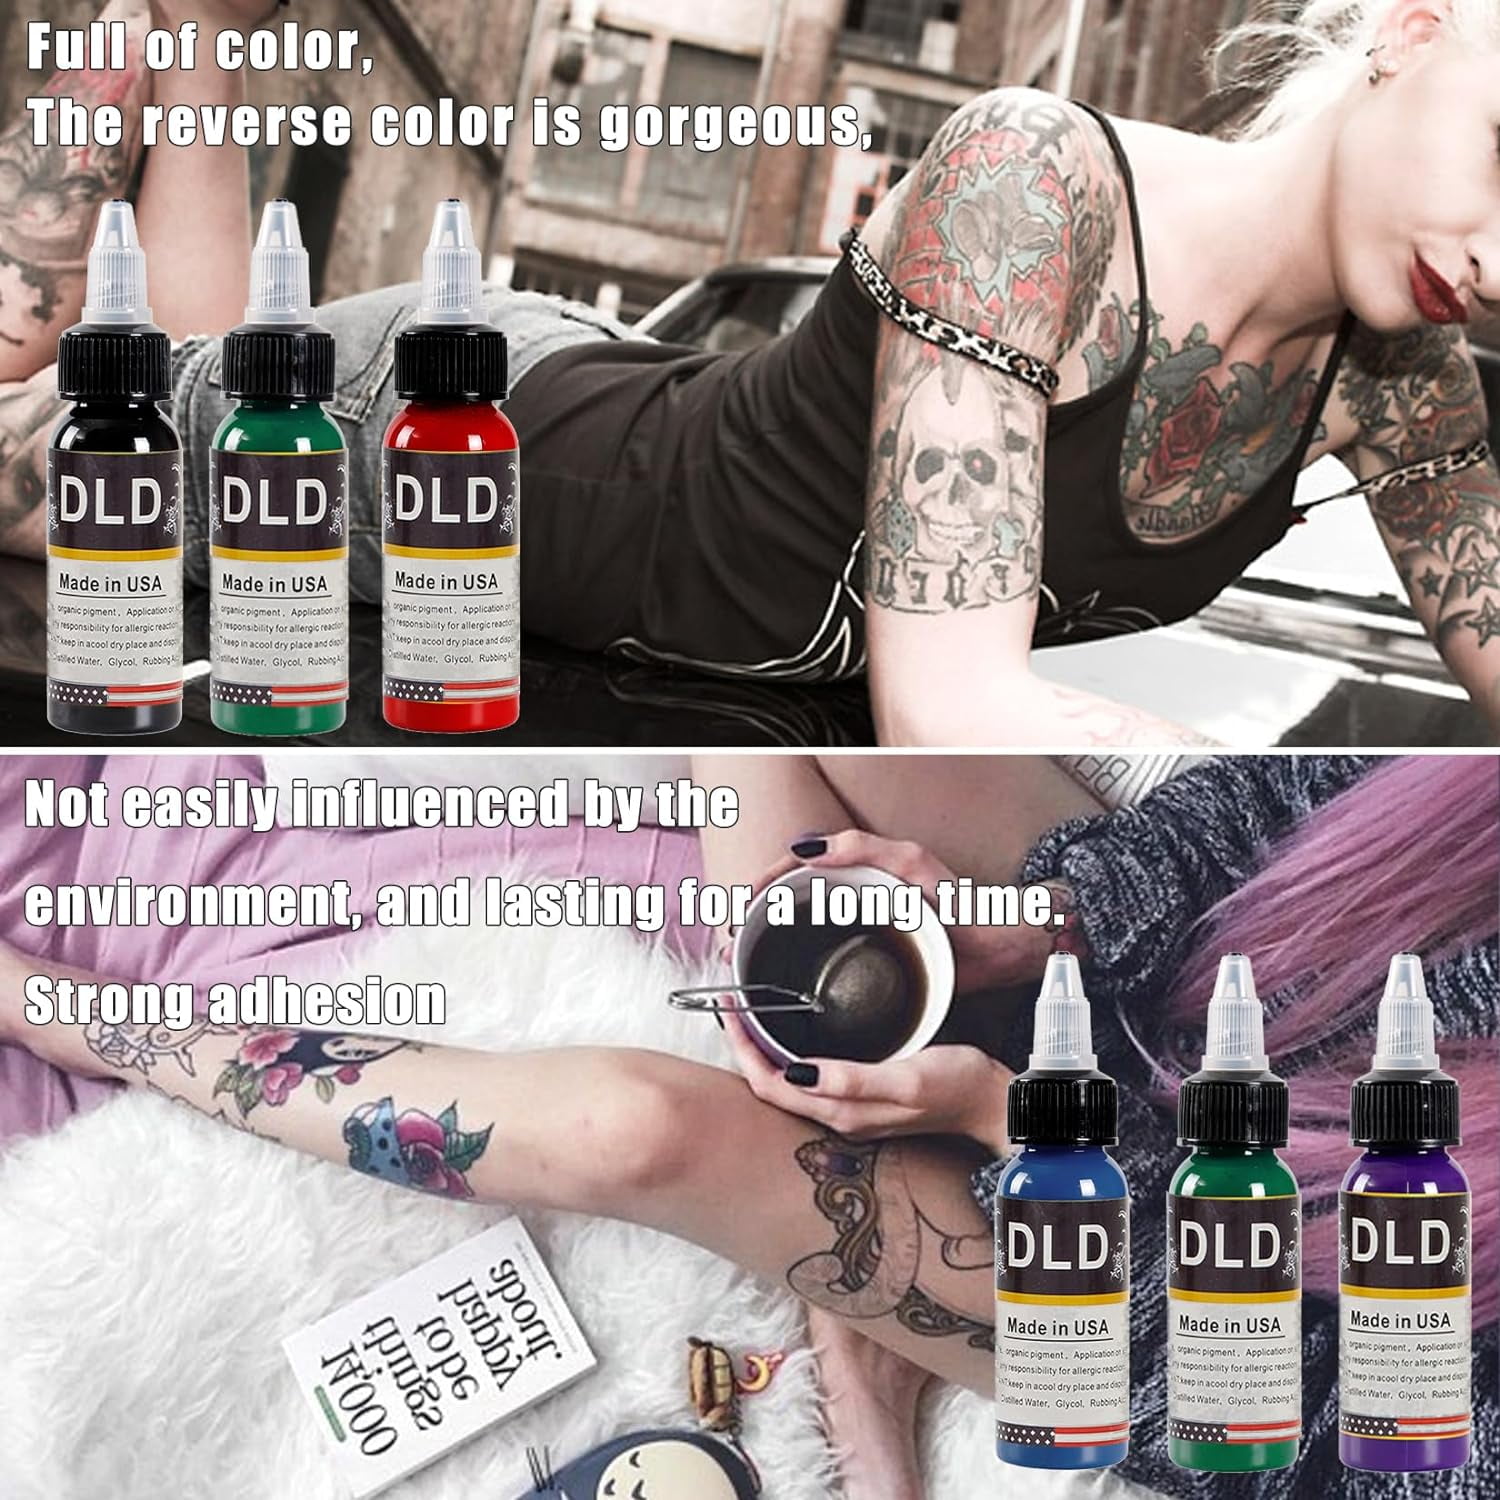 BaodeLi Tattoo Wholesale - New BaodeLi Tattoo Ink 7 Colors Set 1oz  30ml/Bottle Tattoo Pigment Kit